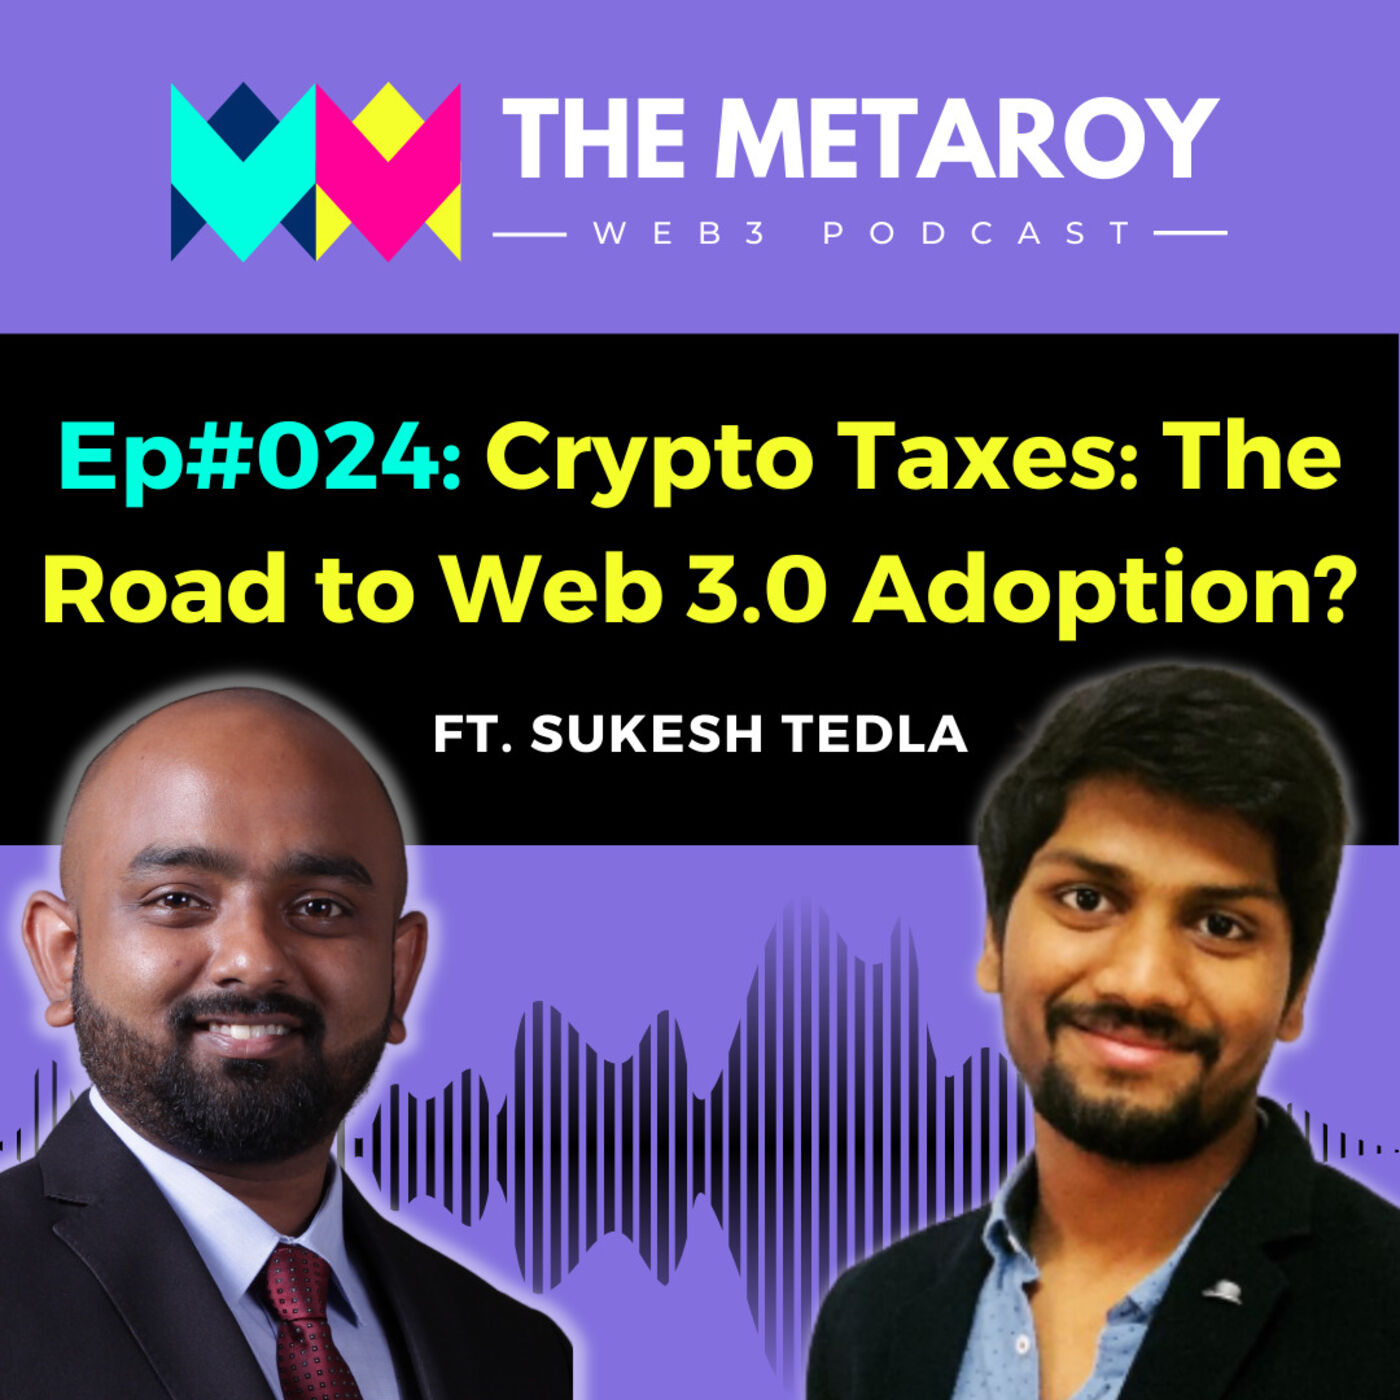 Sukesh Tedla: Crypto Taxes & The Road to Web3 Adoption | Ep #024